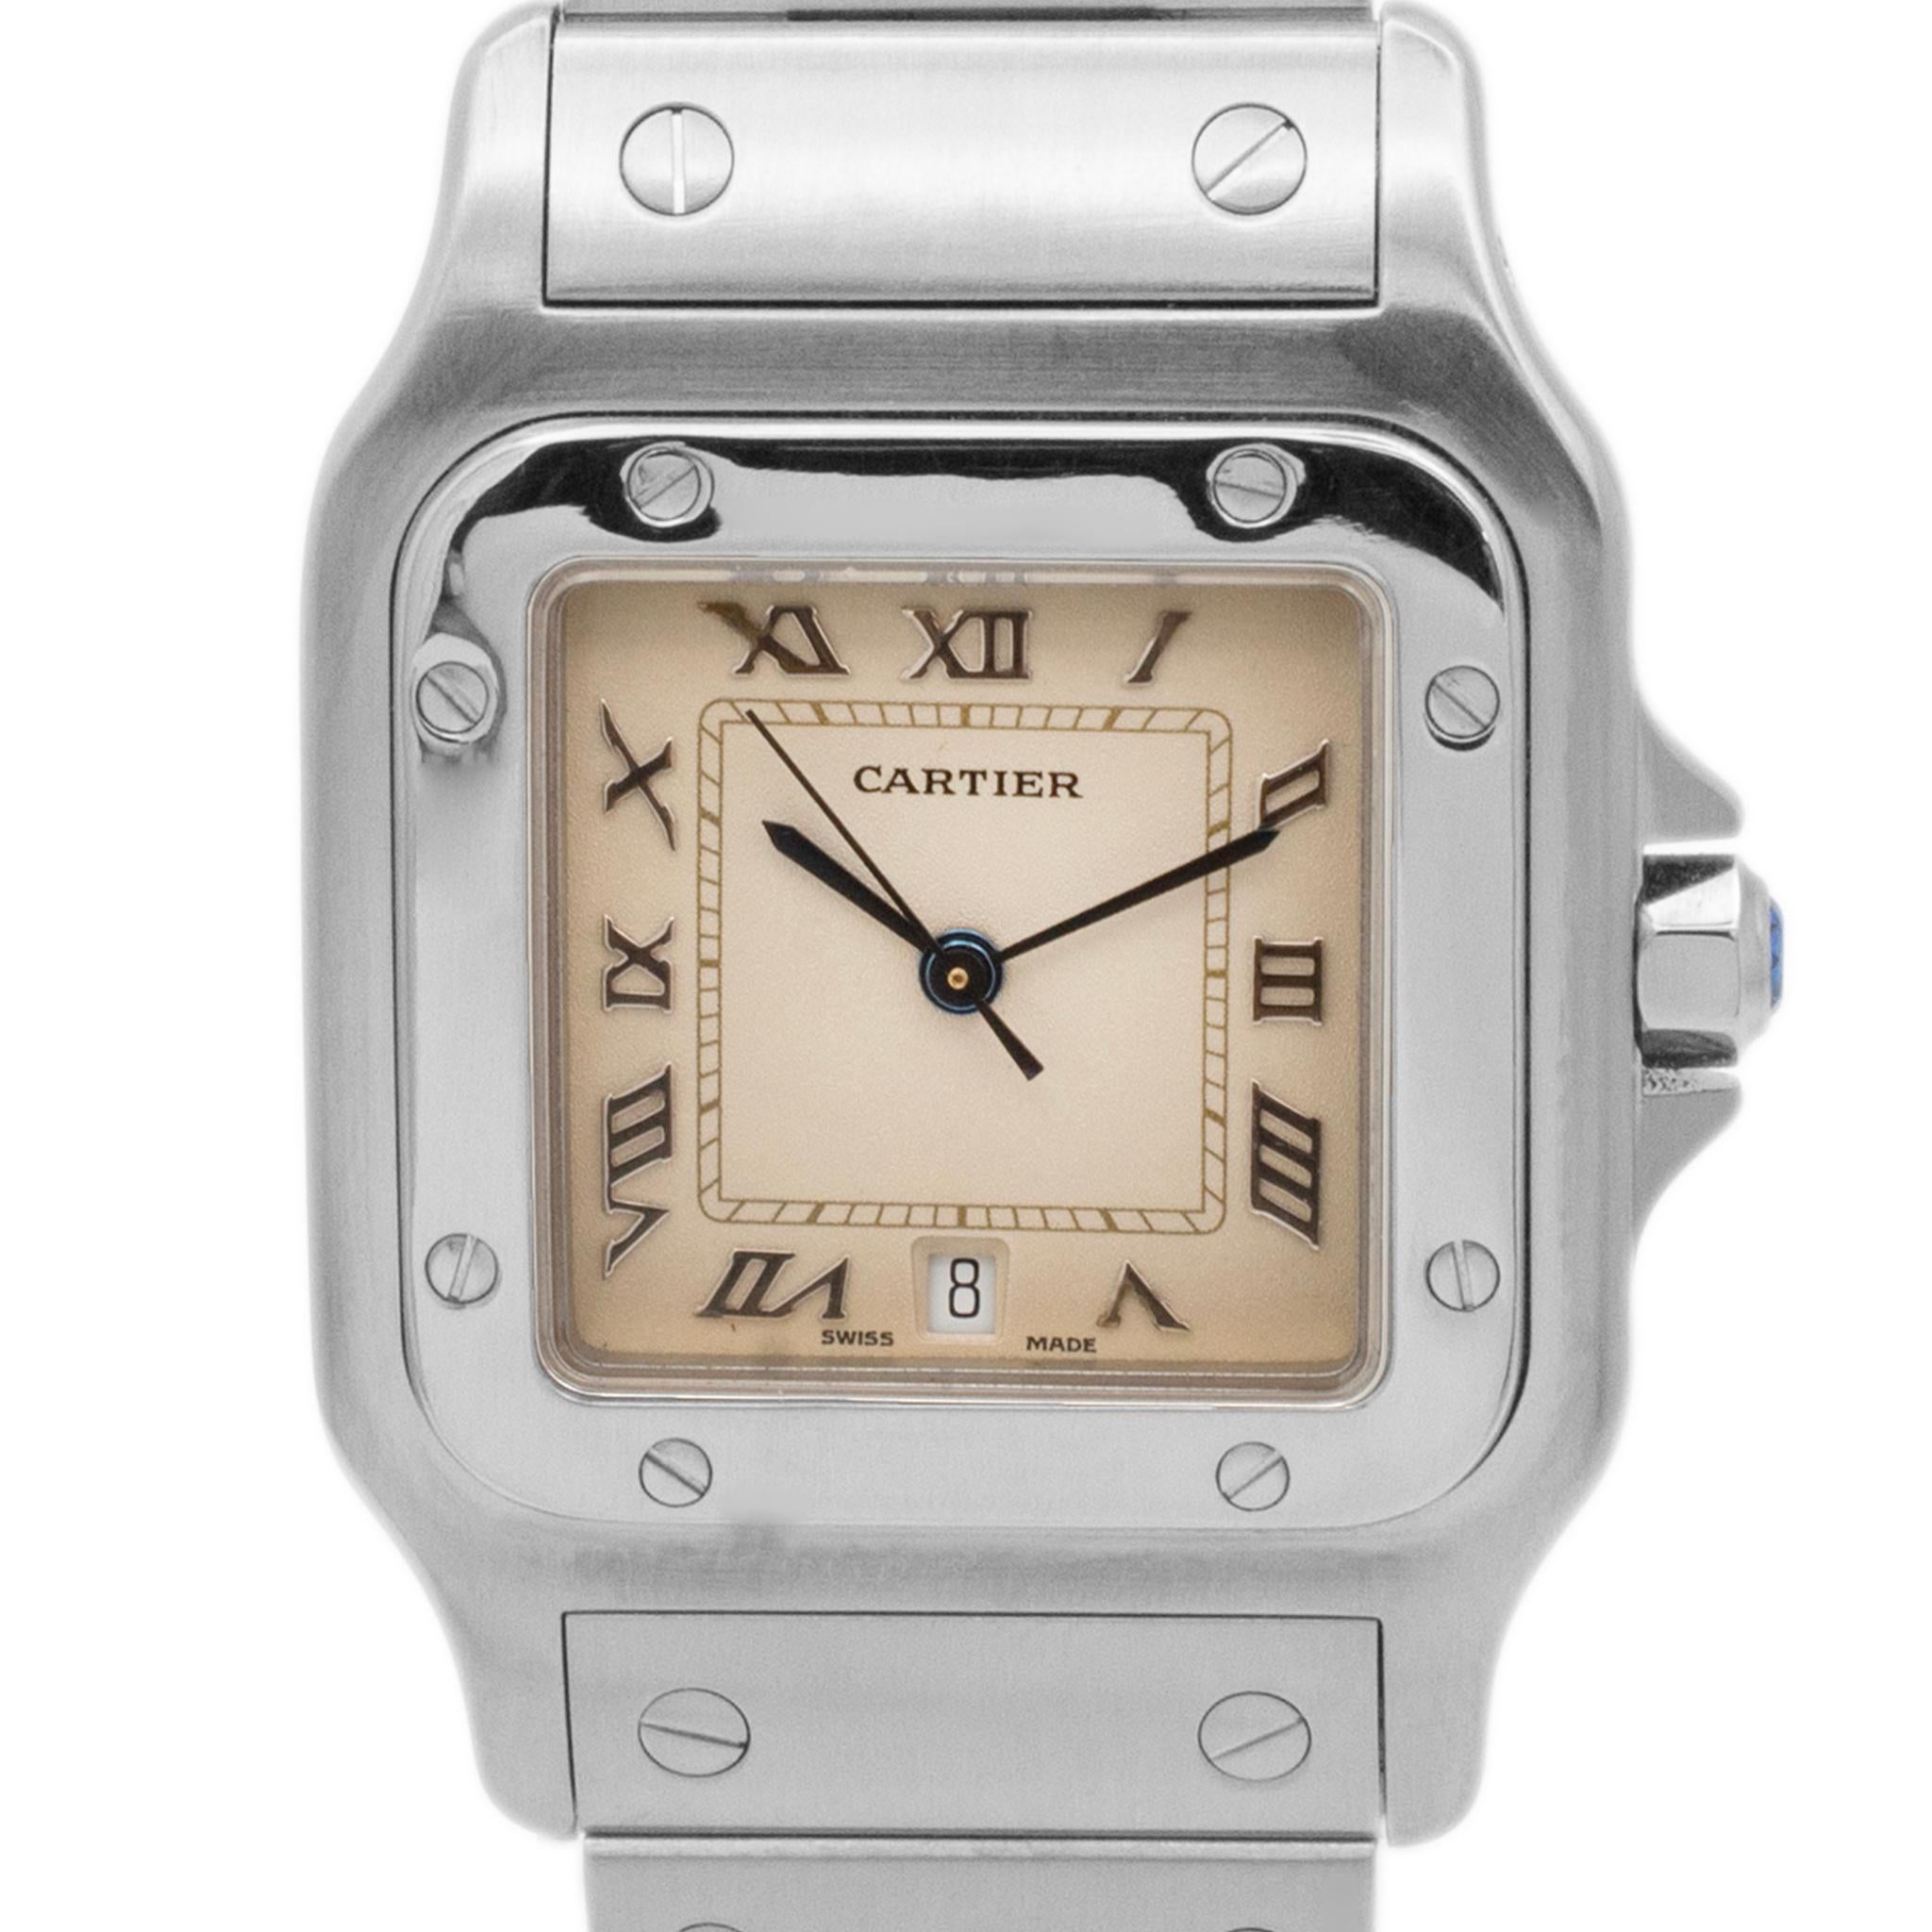 Brand: Cartier 

Gender: Unisex

Metal Type: Stainless Steel

Weight: 84.56 grams

Stainless steel, Cartier Swiss-made watch. The 